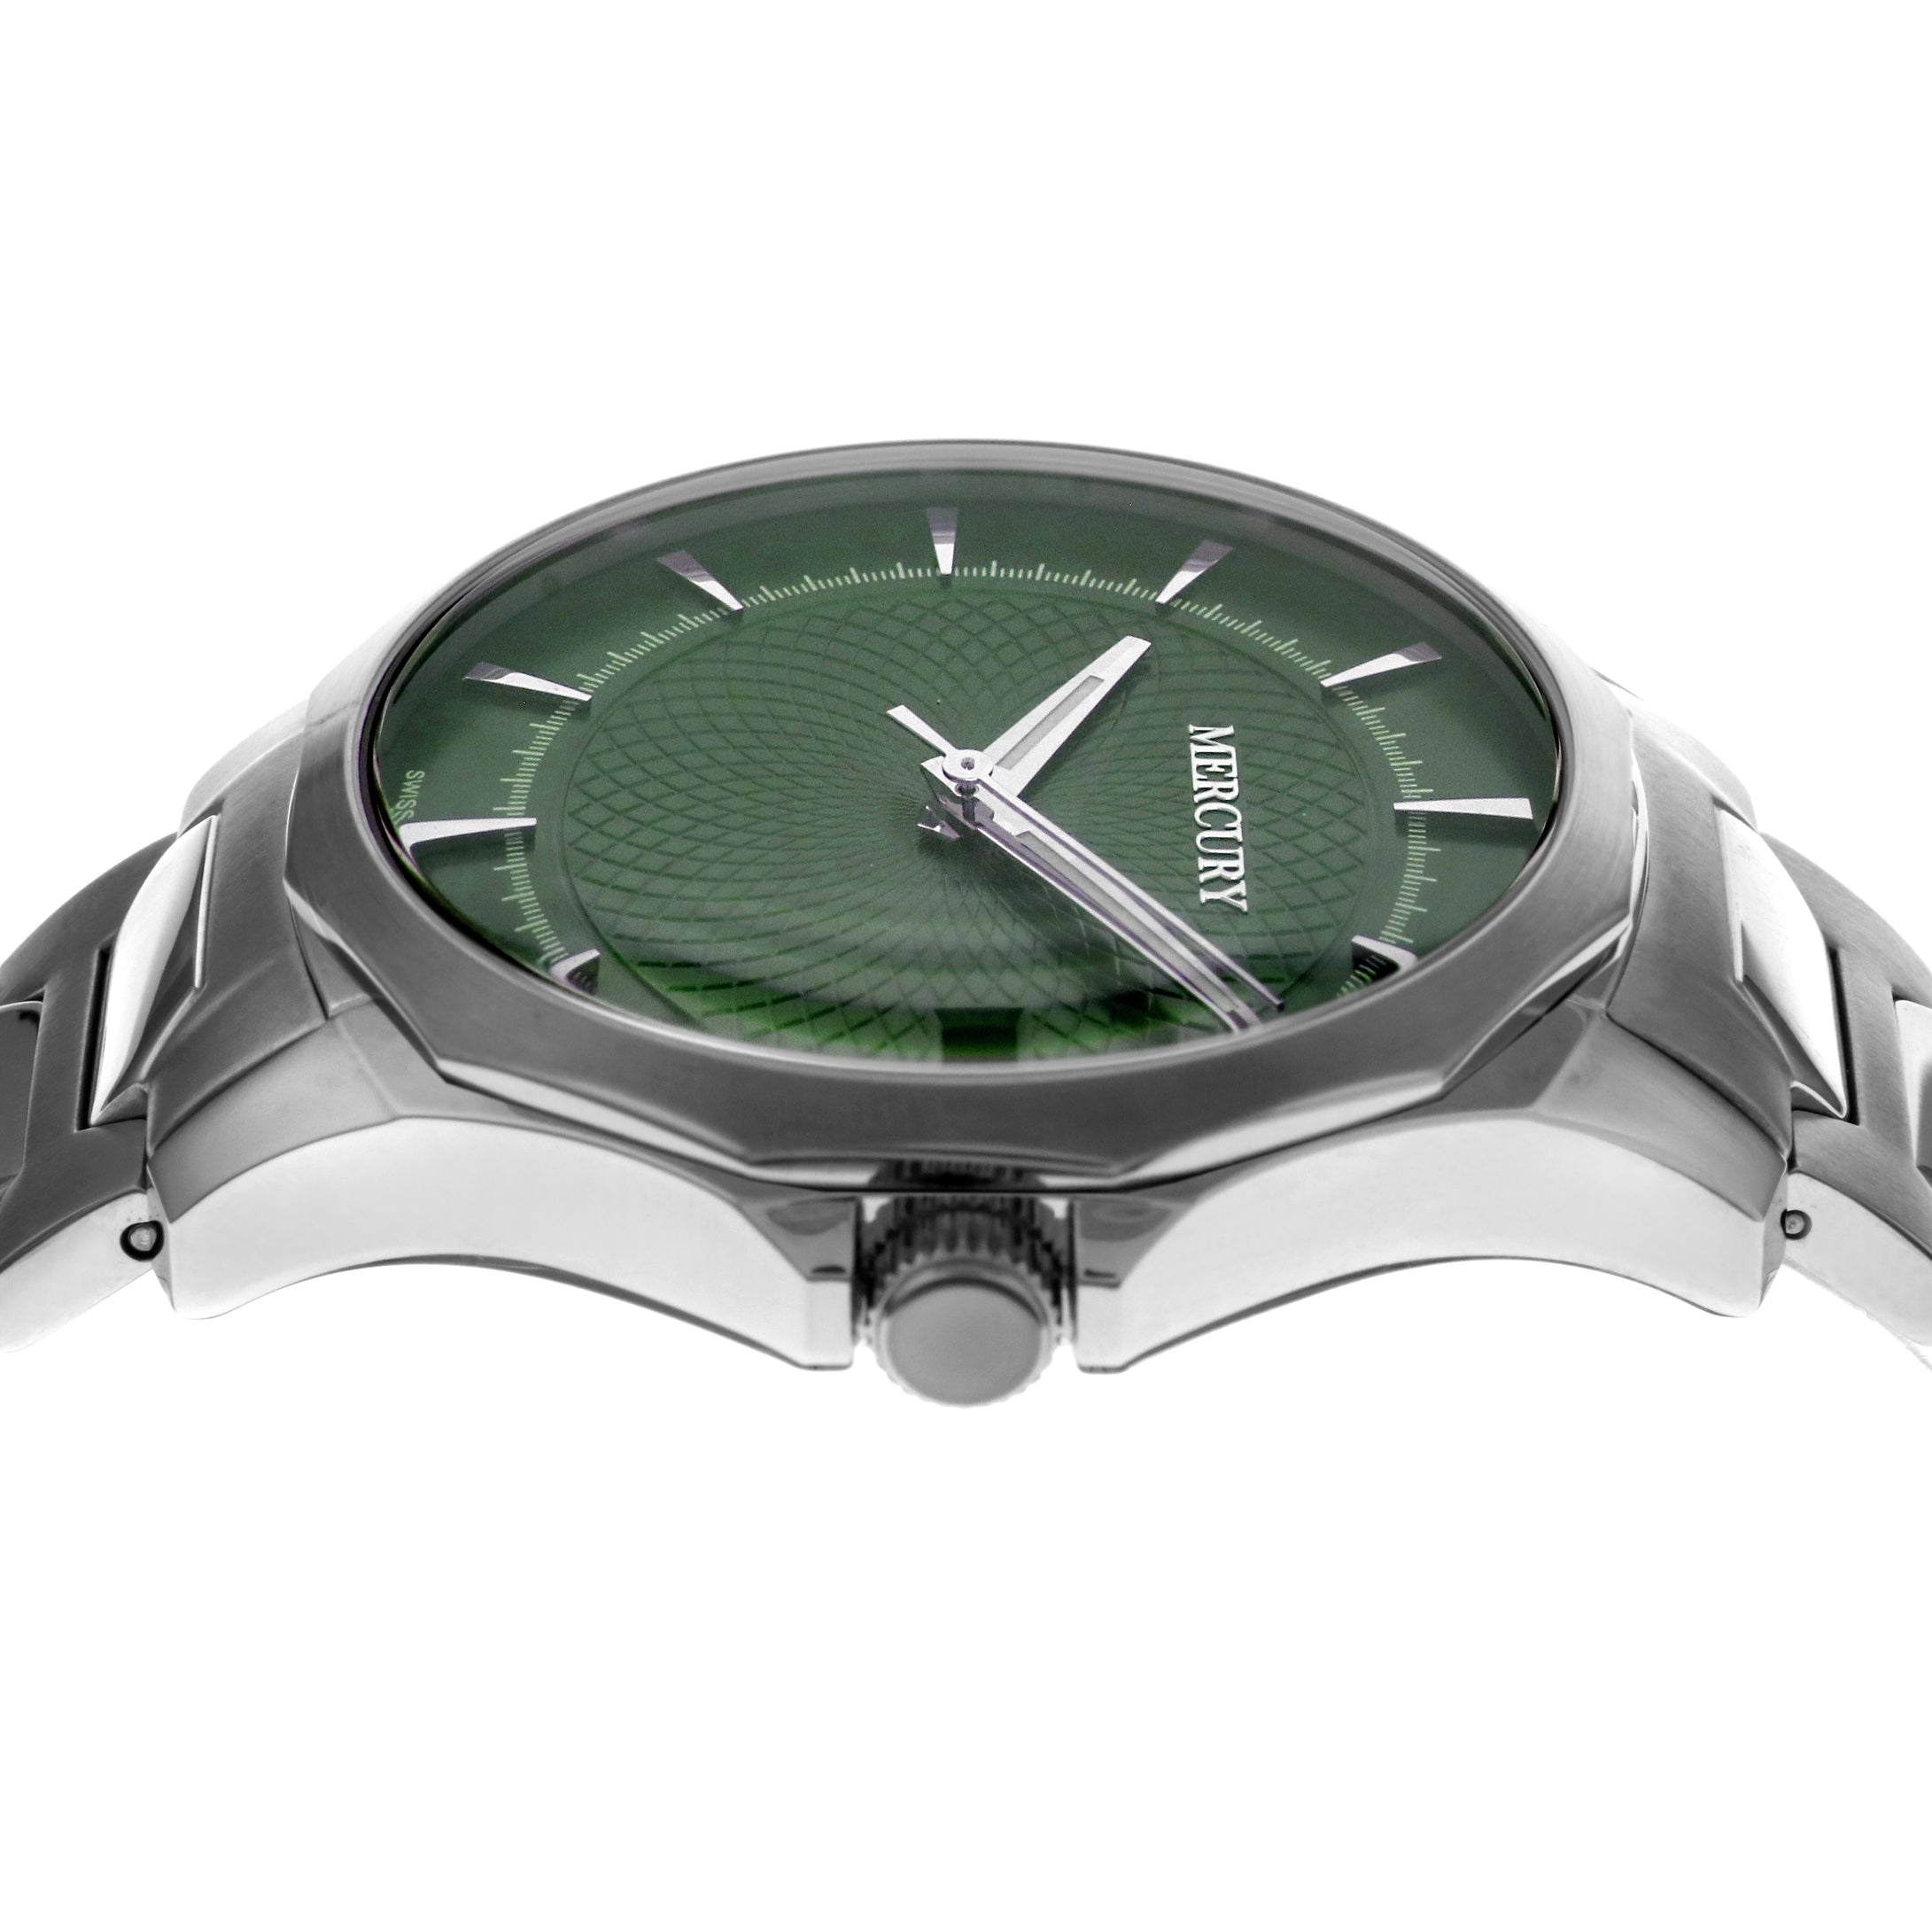 Mercury Men's Swiss Quartz Watch with Green Dial - MER-0046